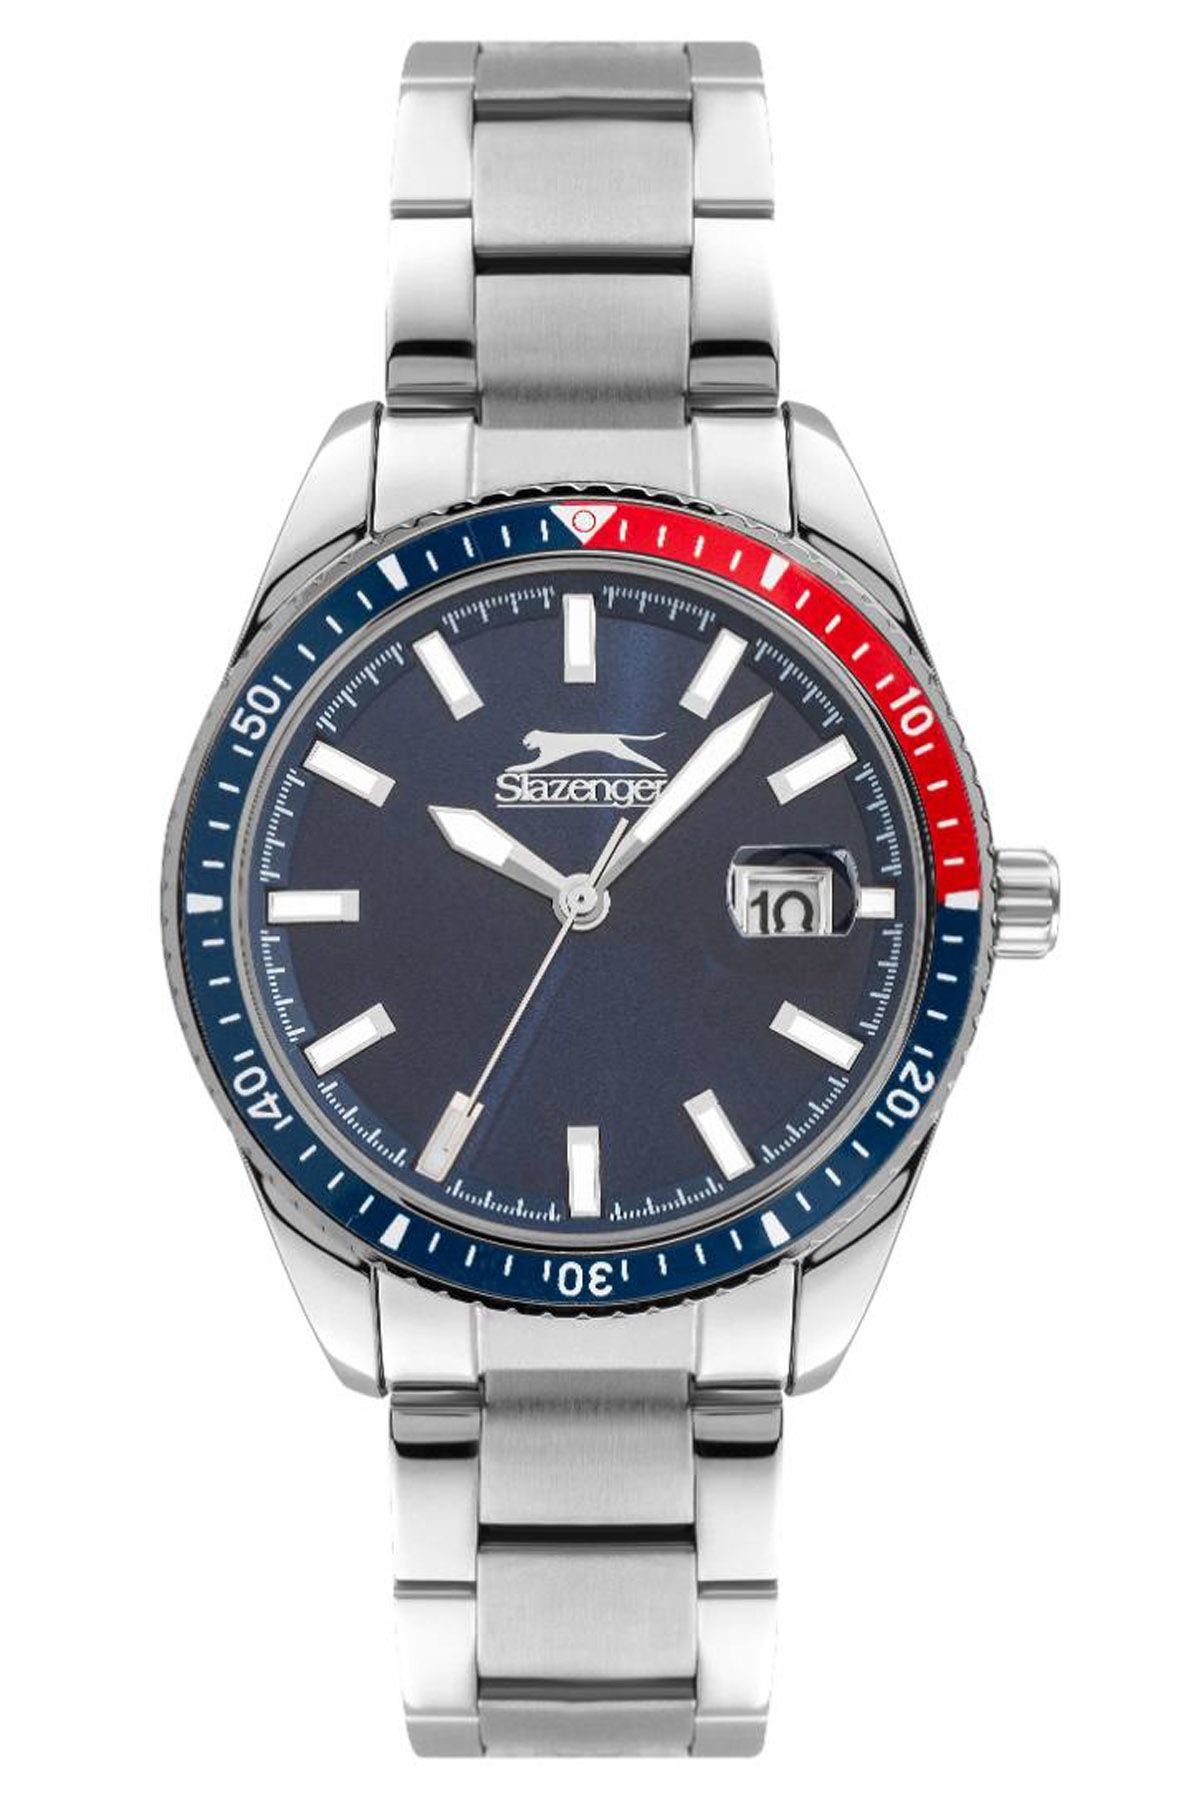 slazenger watches Slazenger wristwatch model SL.9.6541.4.05 – slazenger  watches שעוני שלזינגר